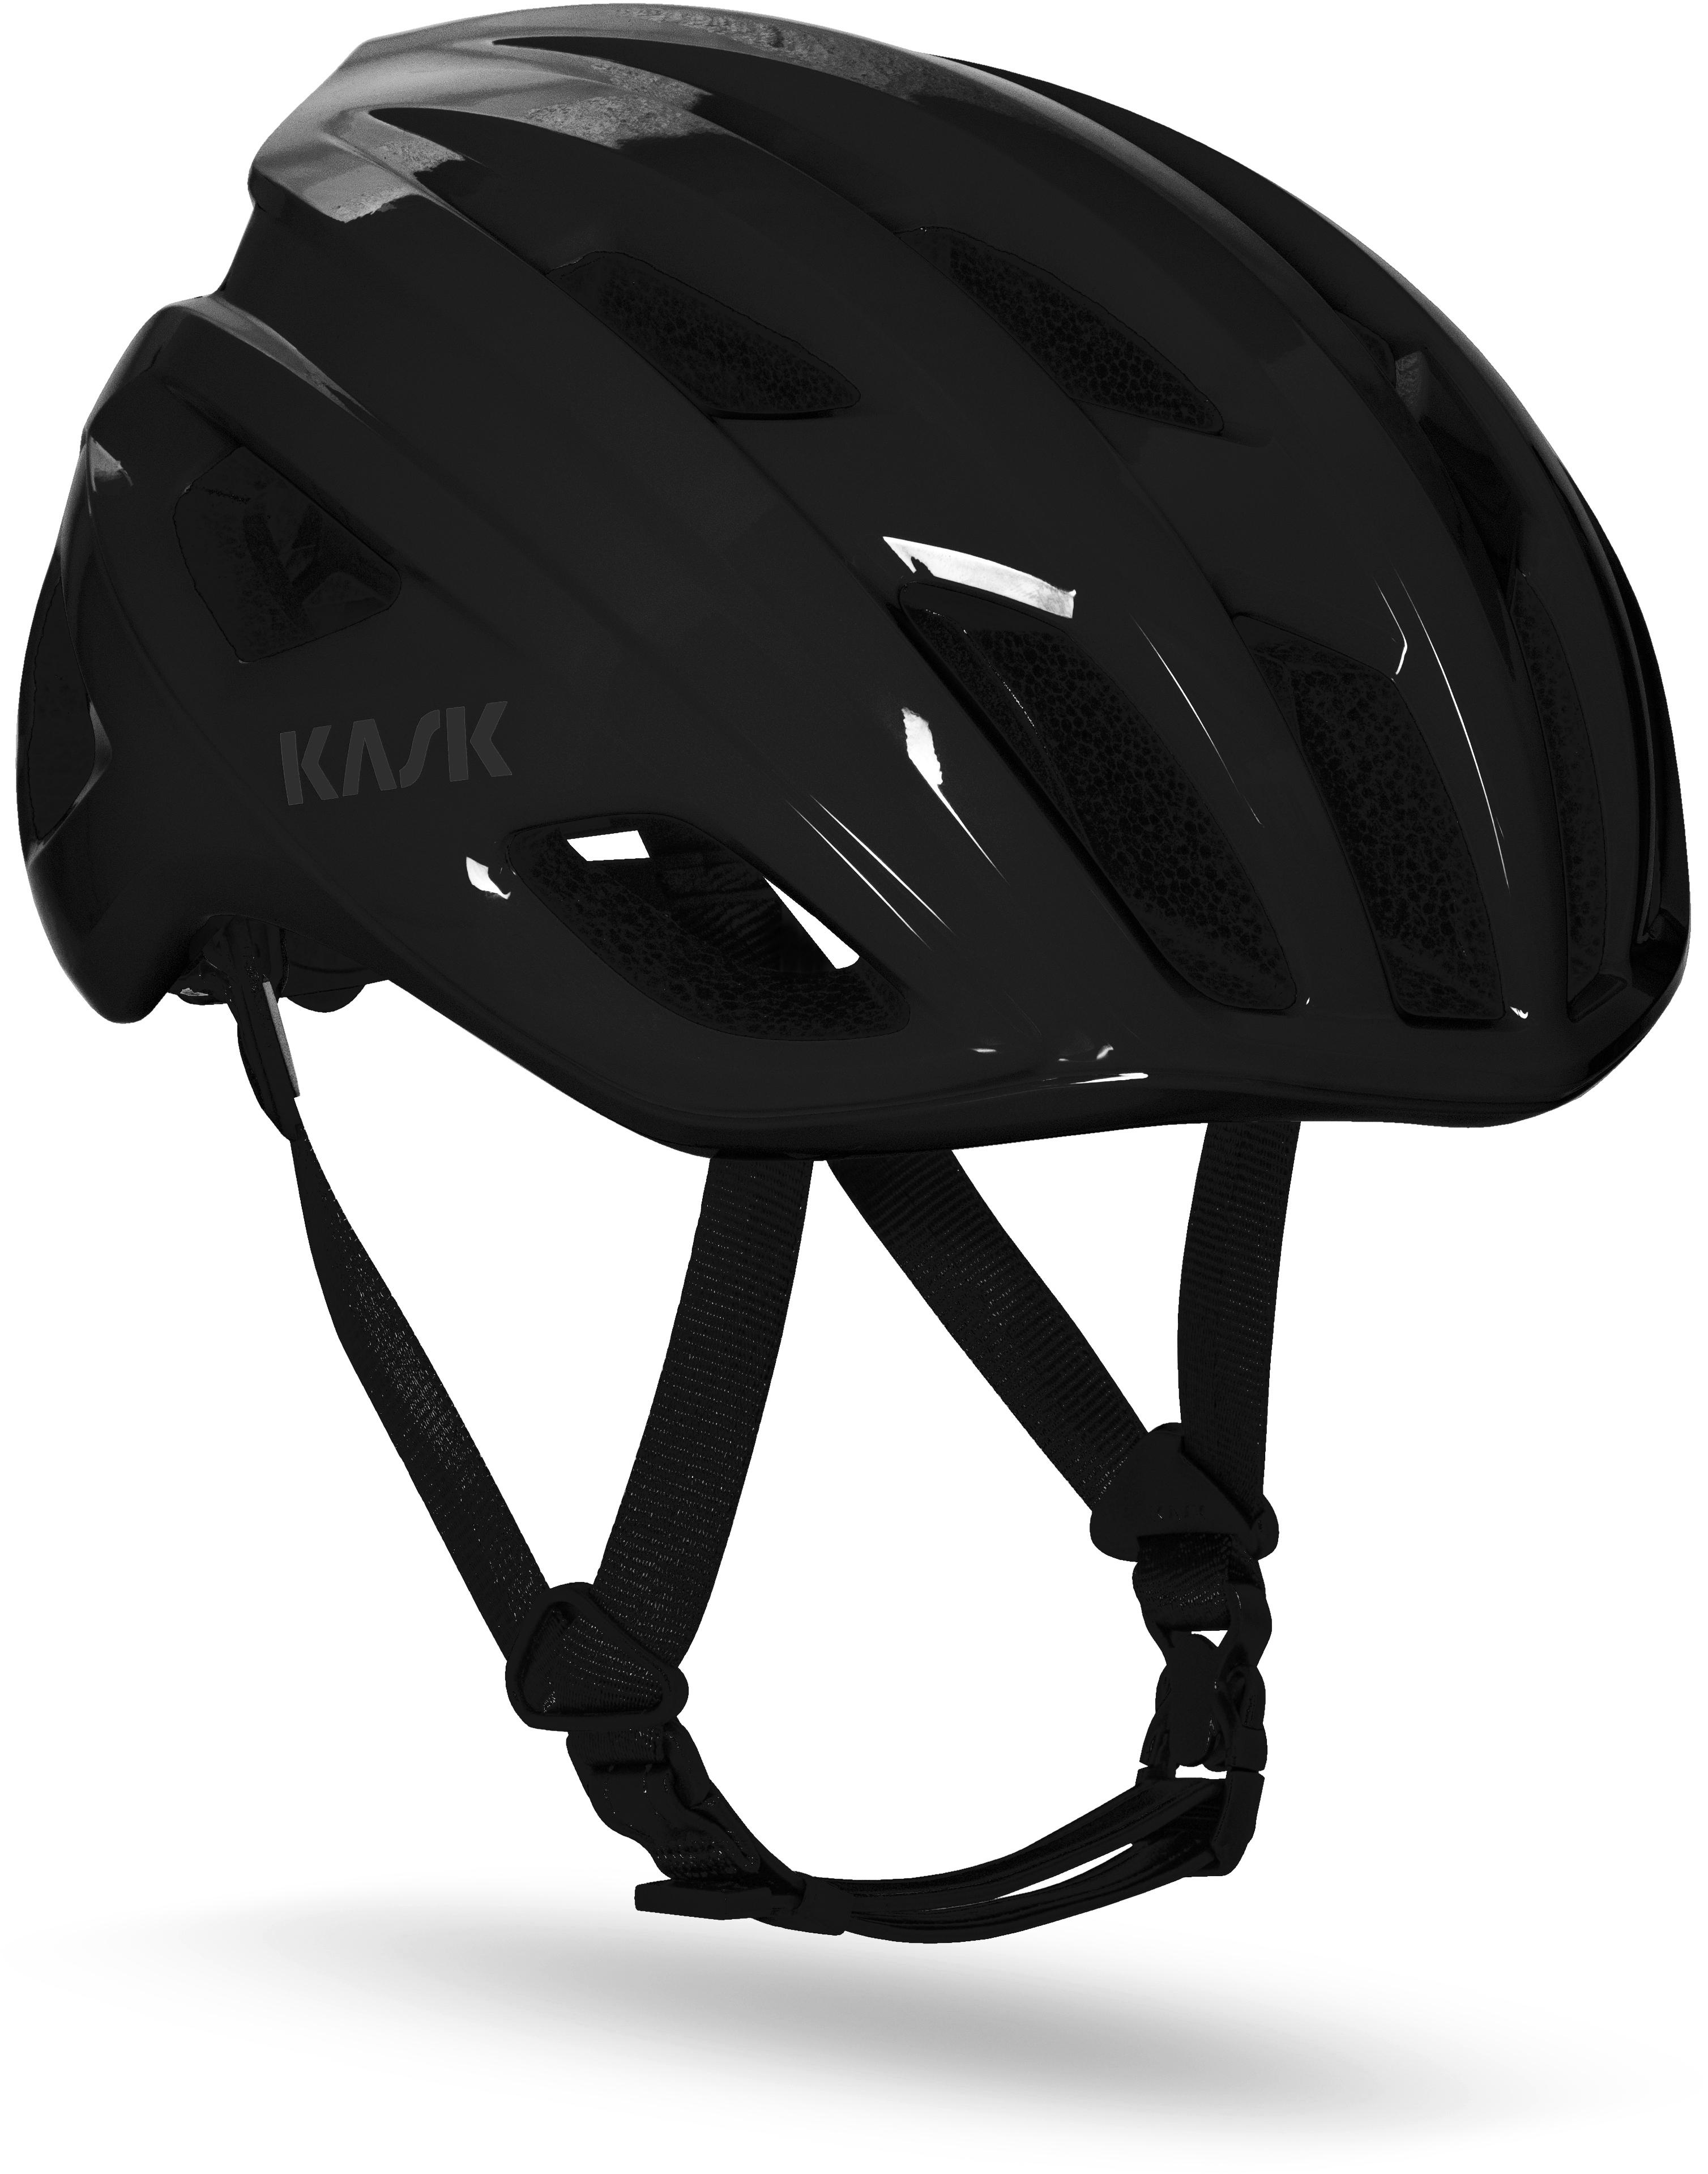 Kask Mojito Wg11 Road Helmet Black, Small